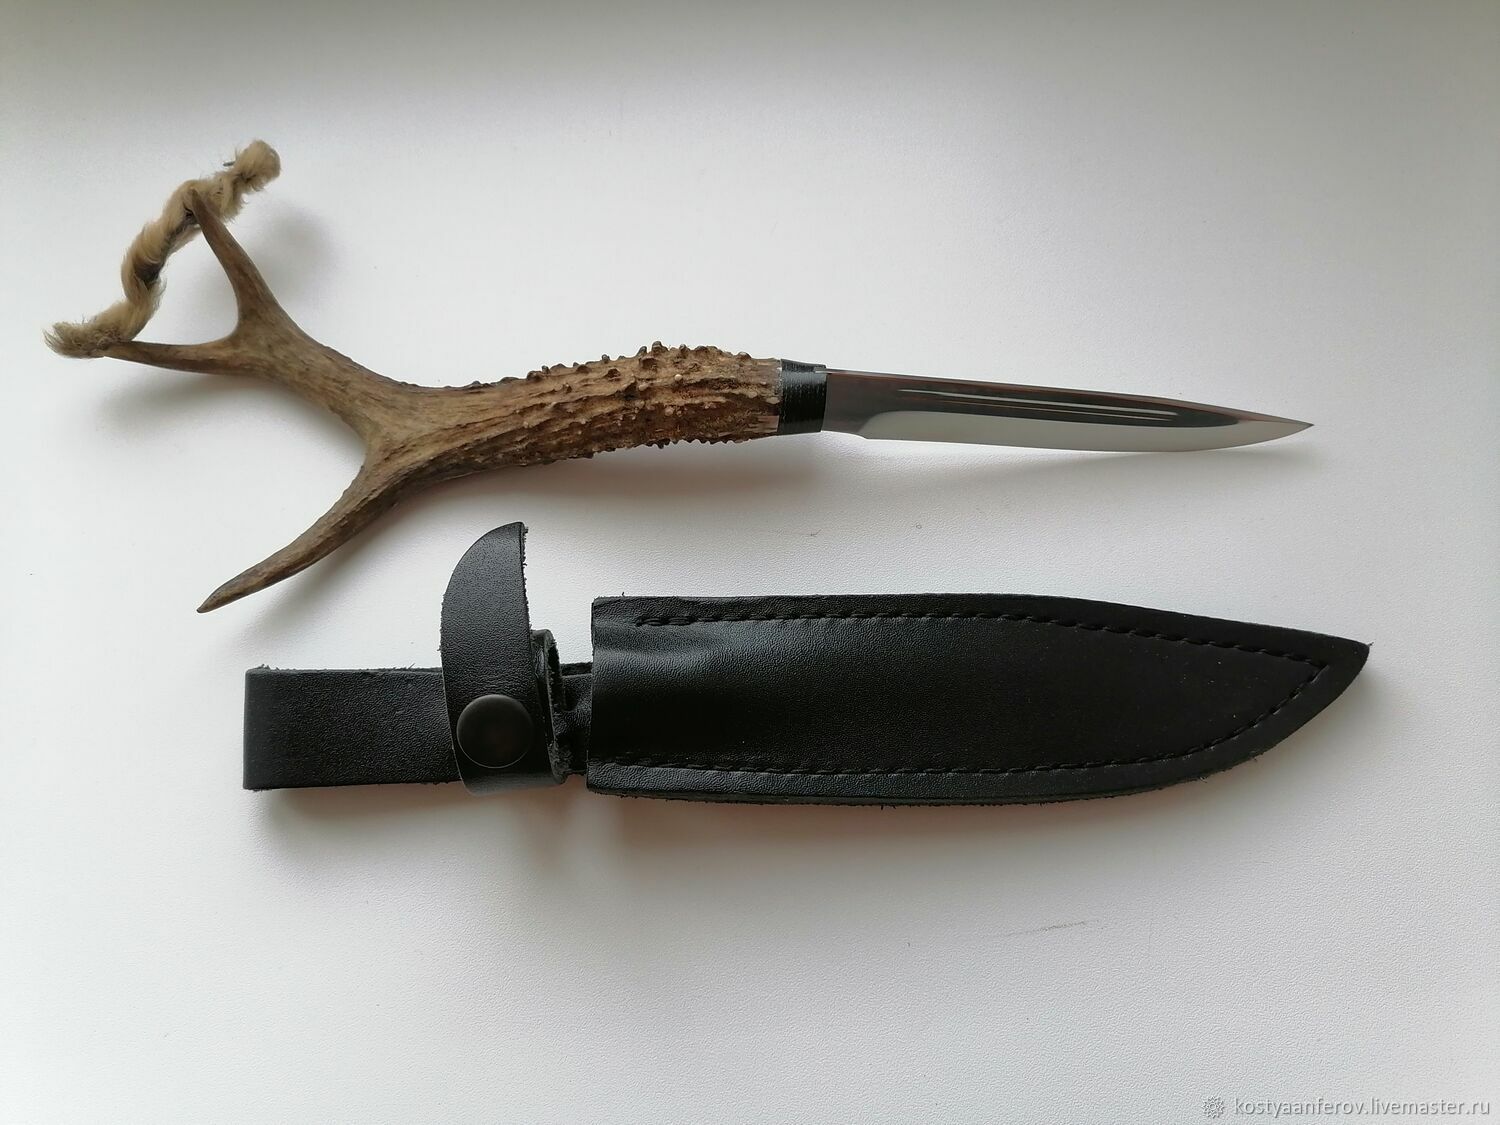 Ritual knife 'Forest spirit', Ritual knife, Chrysostom,  Фото №1